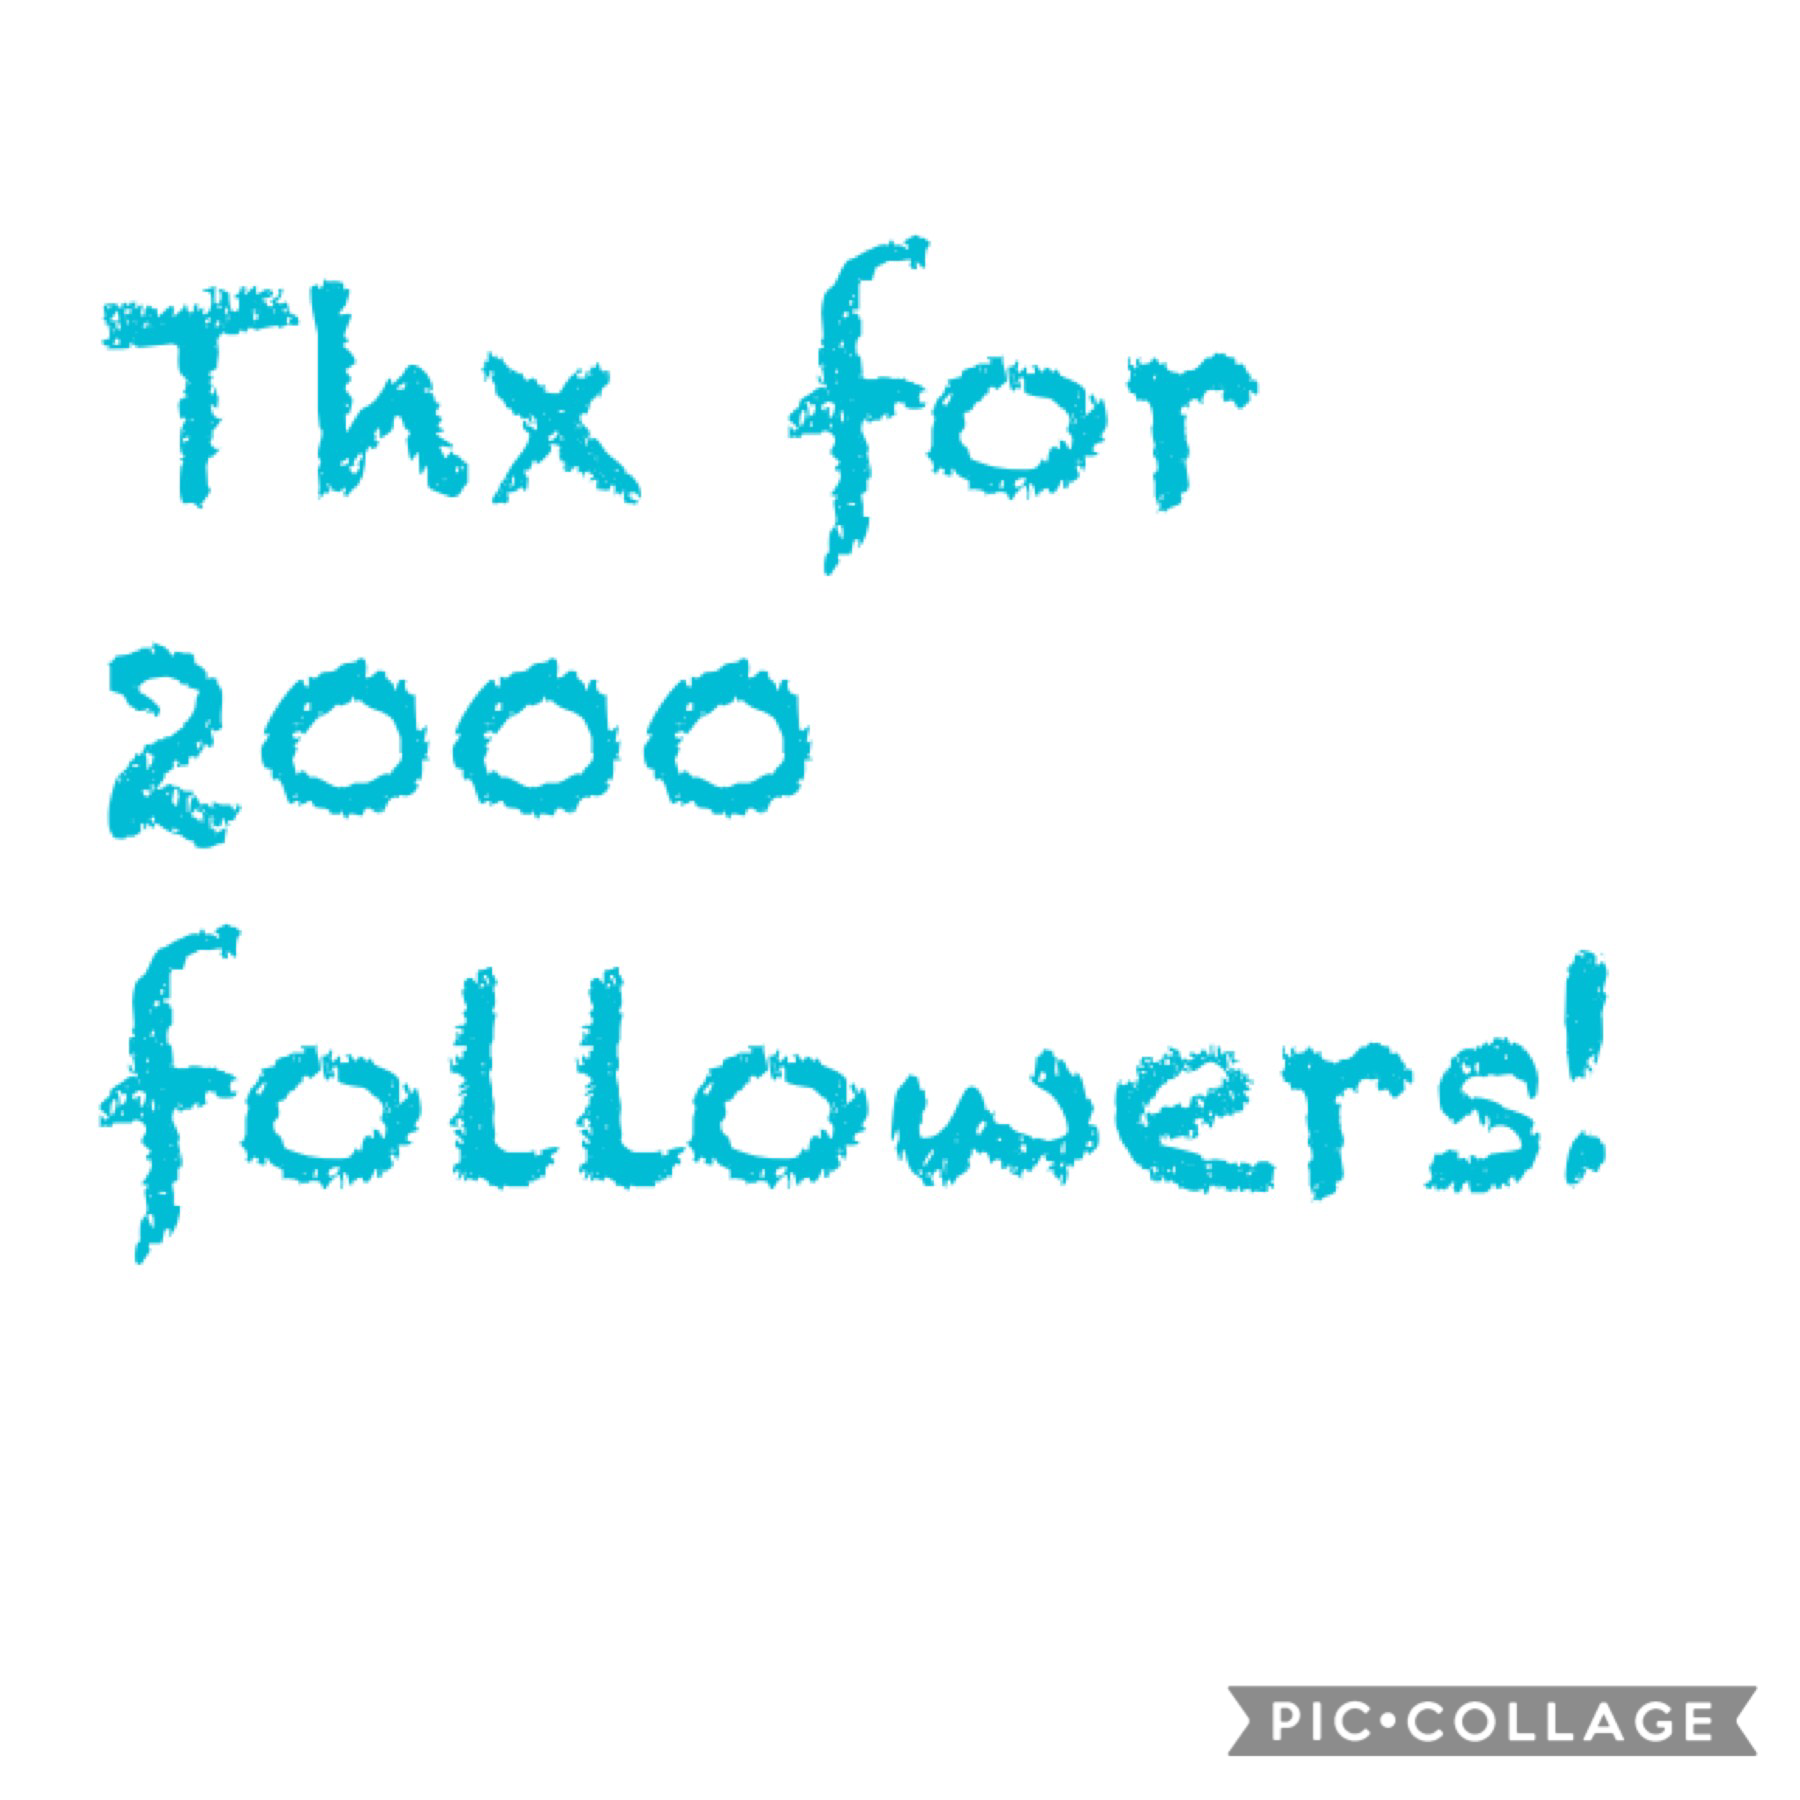 Thx for 2000 followers! 
OoOoOf